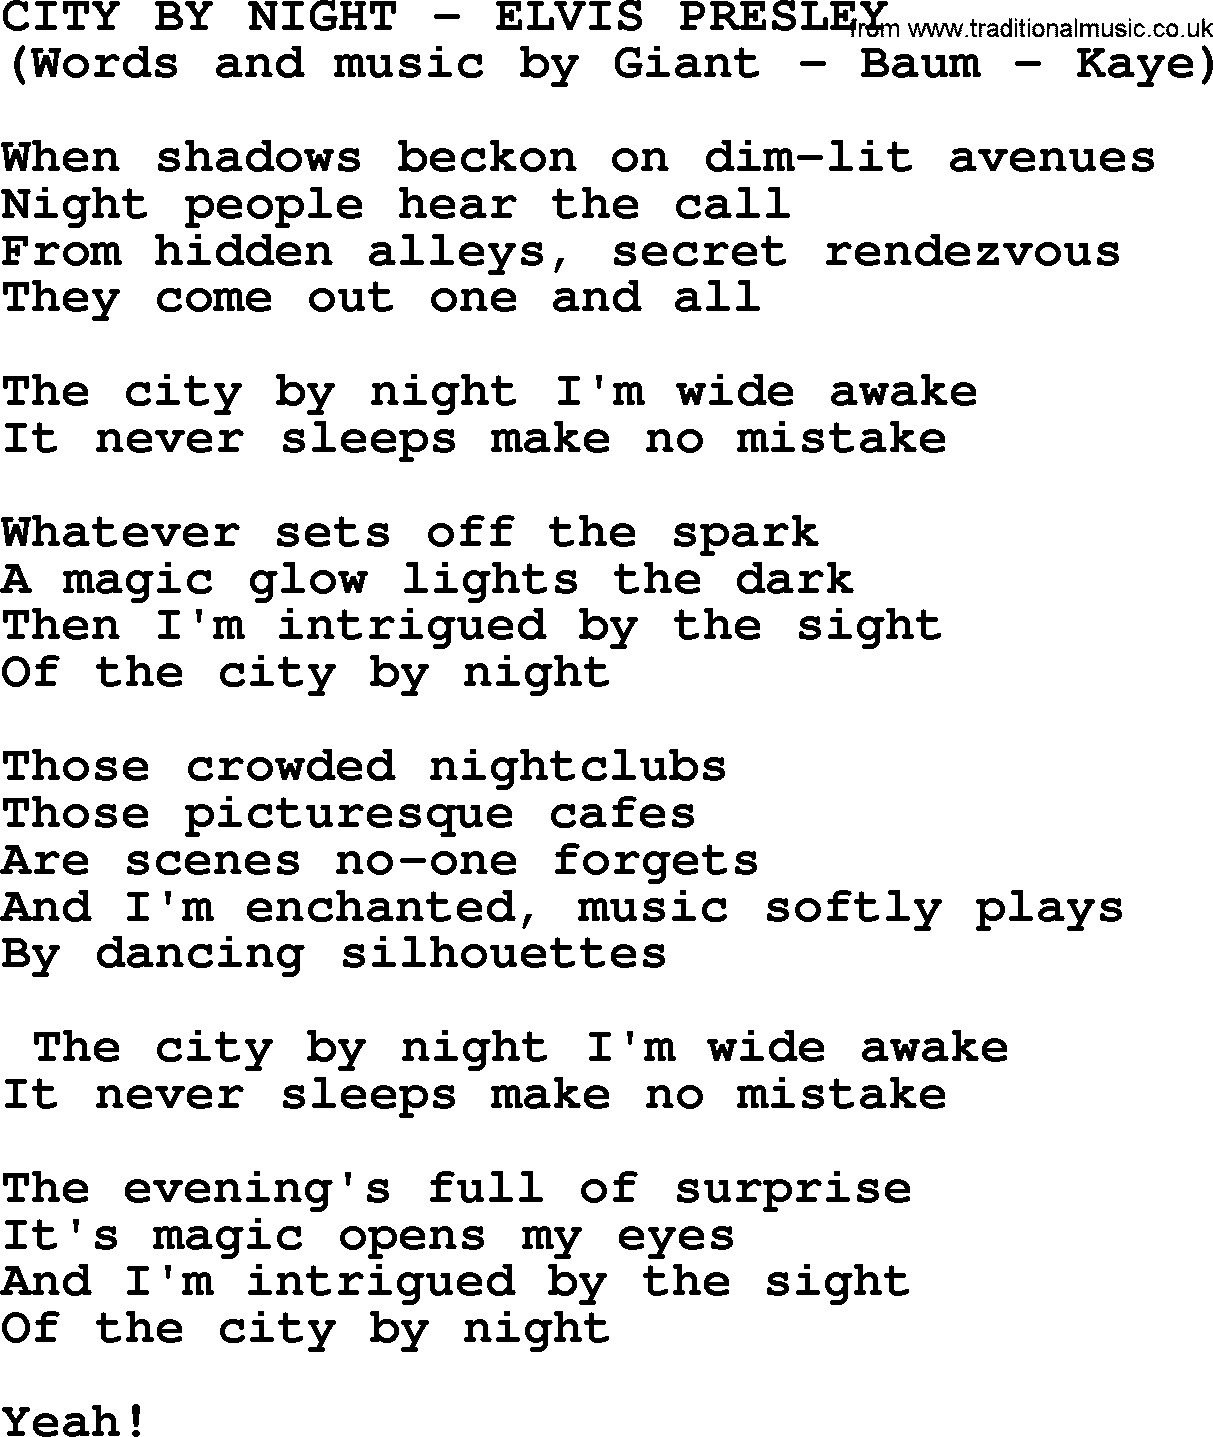 Elvis Presley song: City By Night lyrics